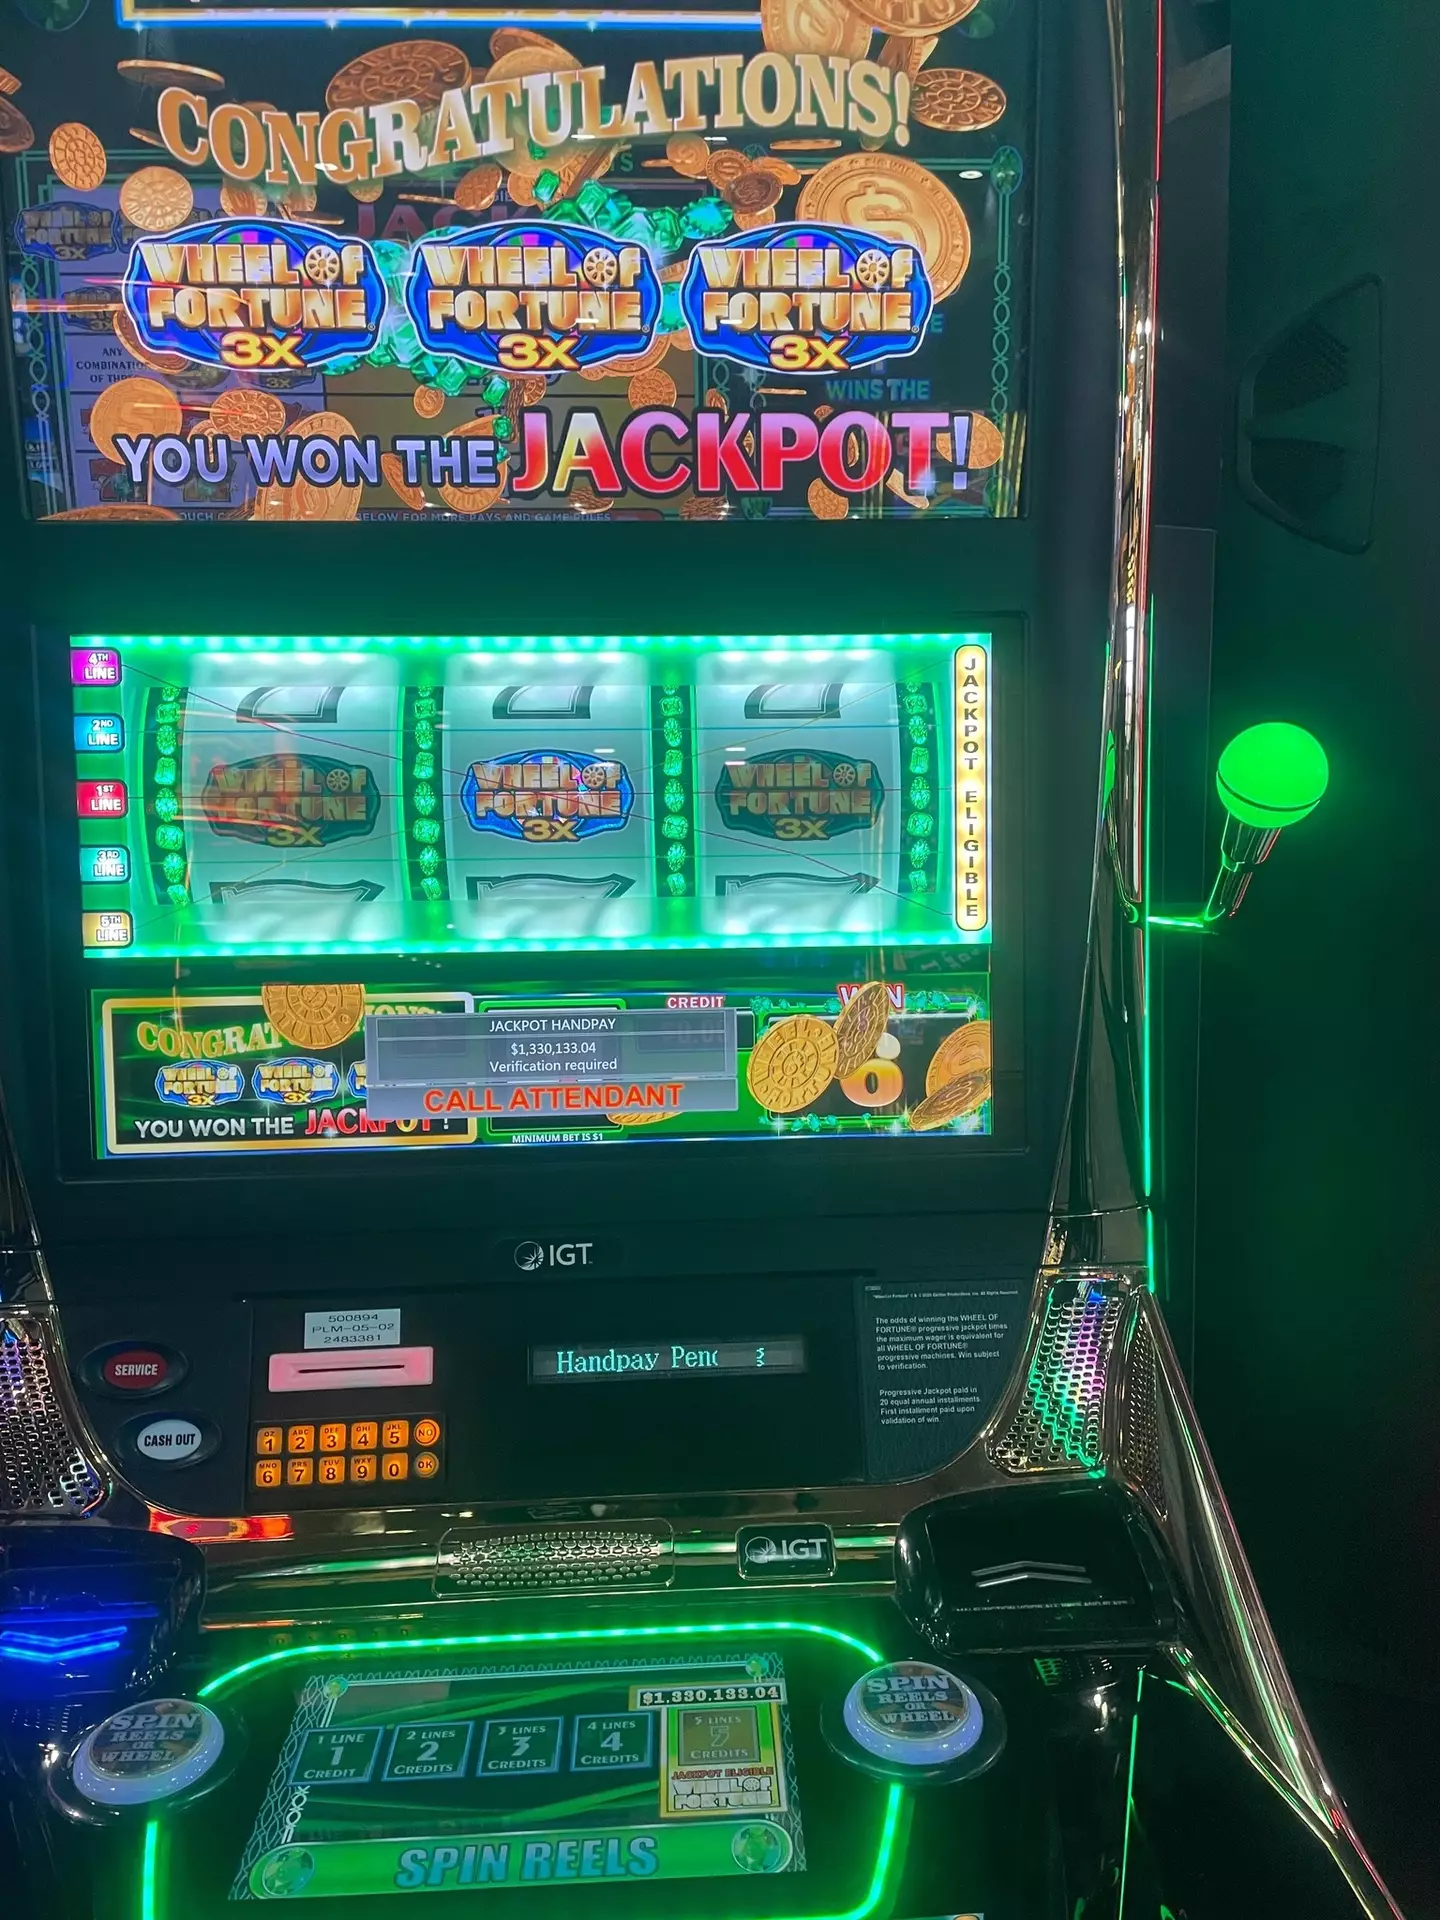 The gambler won $1.3 million (around £1 million) on the Wheel of Fortune slot machine.